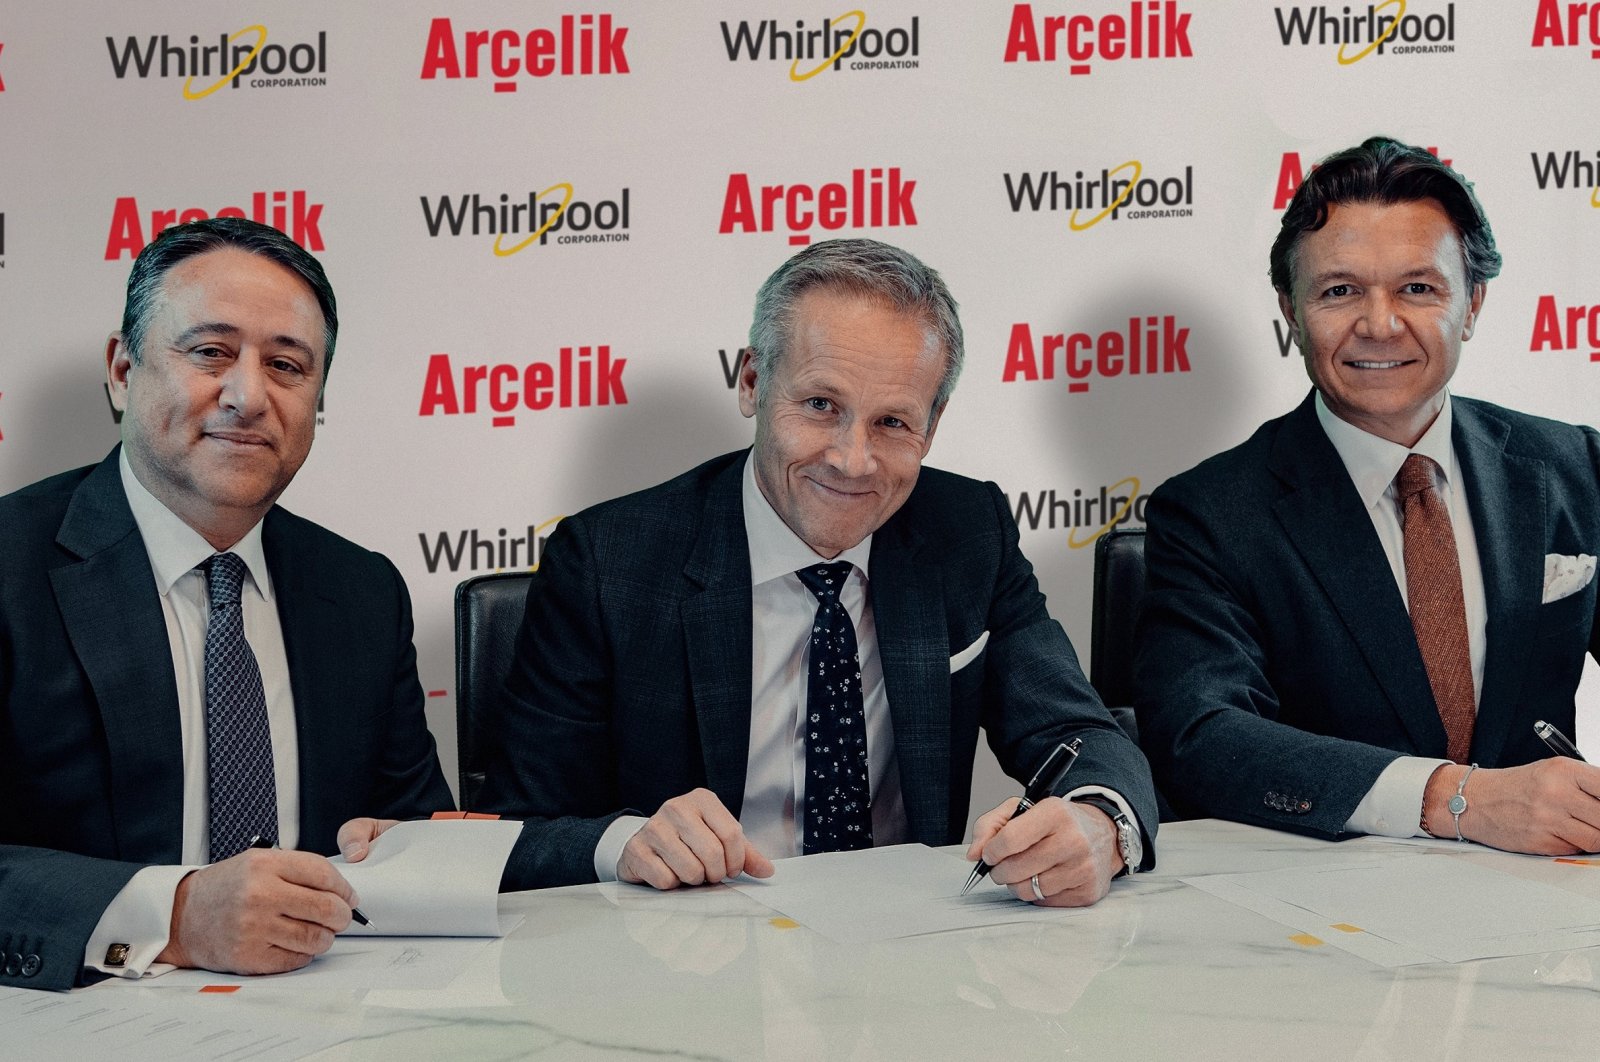 From left, Consumer Durables Group President of Koç Holding Fatih Kemal Ebiçlioğlu, Whirlpool Cooperation CEO Marc Bitzer and Arçelik CEO Hakan Bulgurlu. (Courtesy of Arçelik)